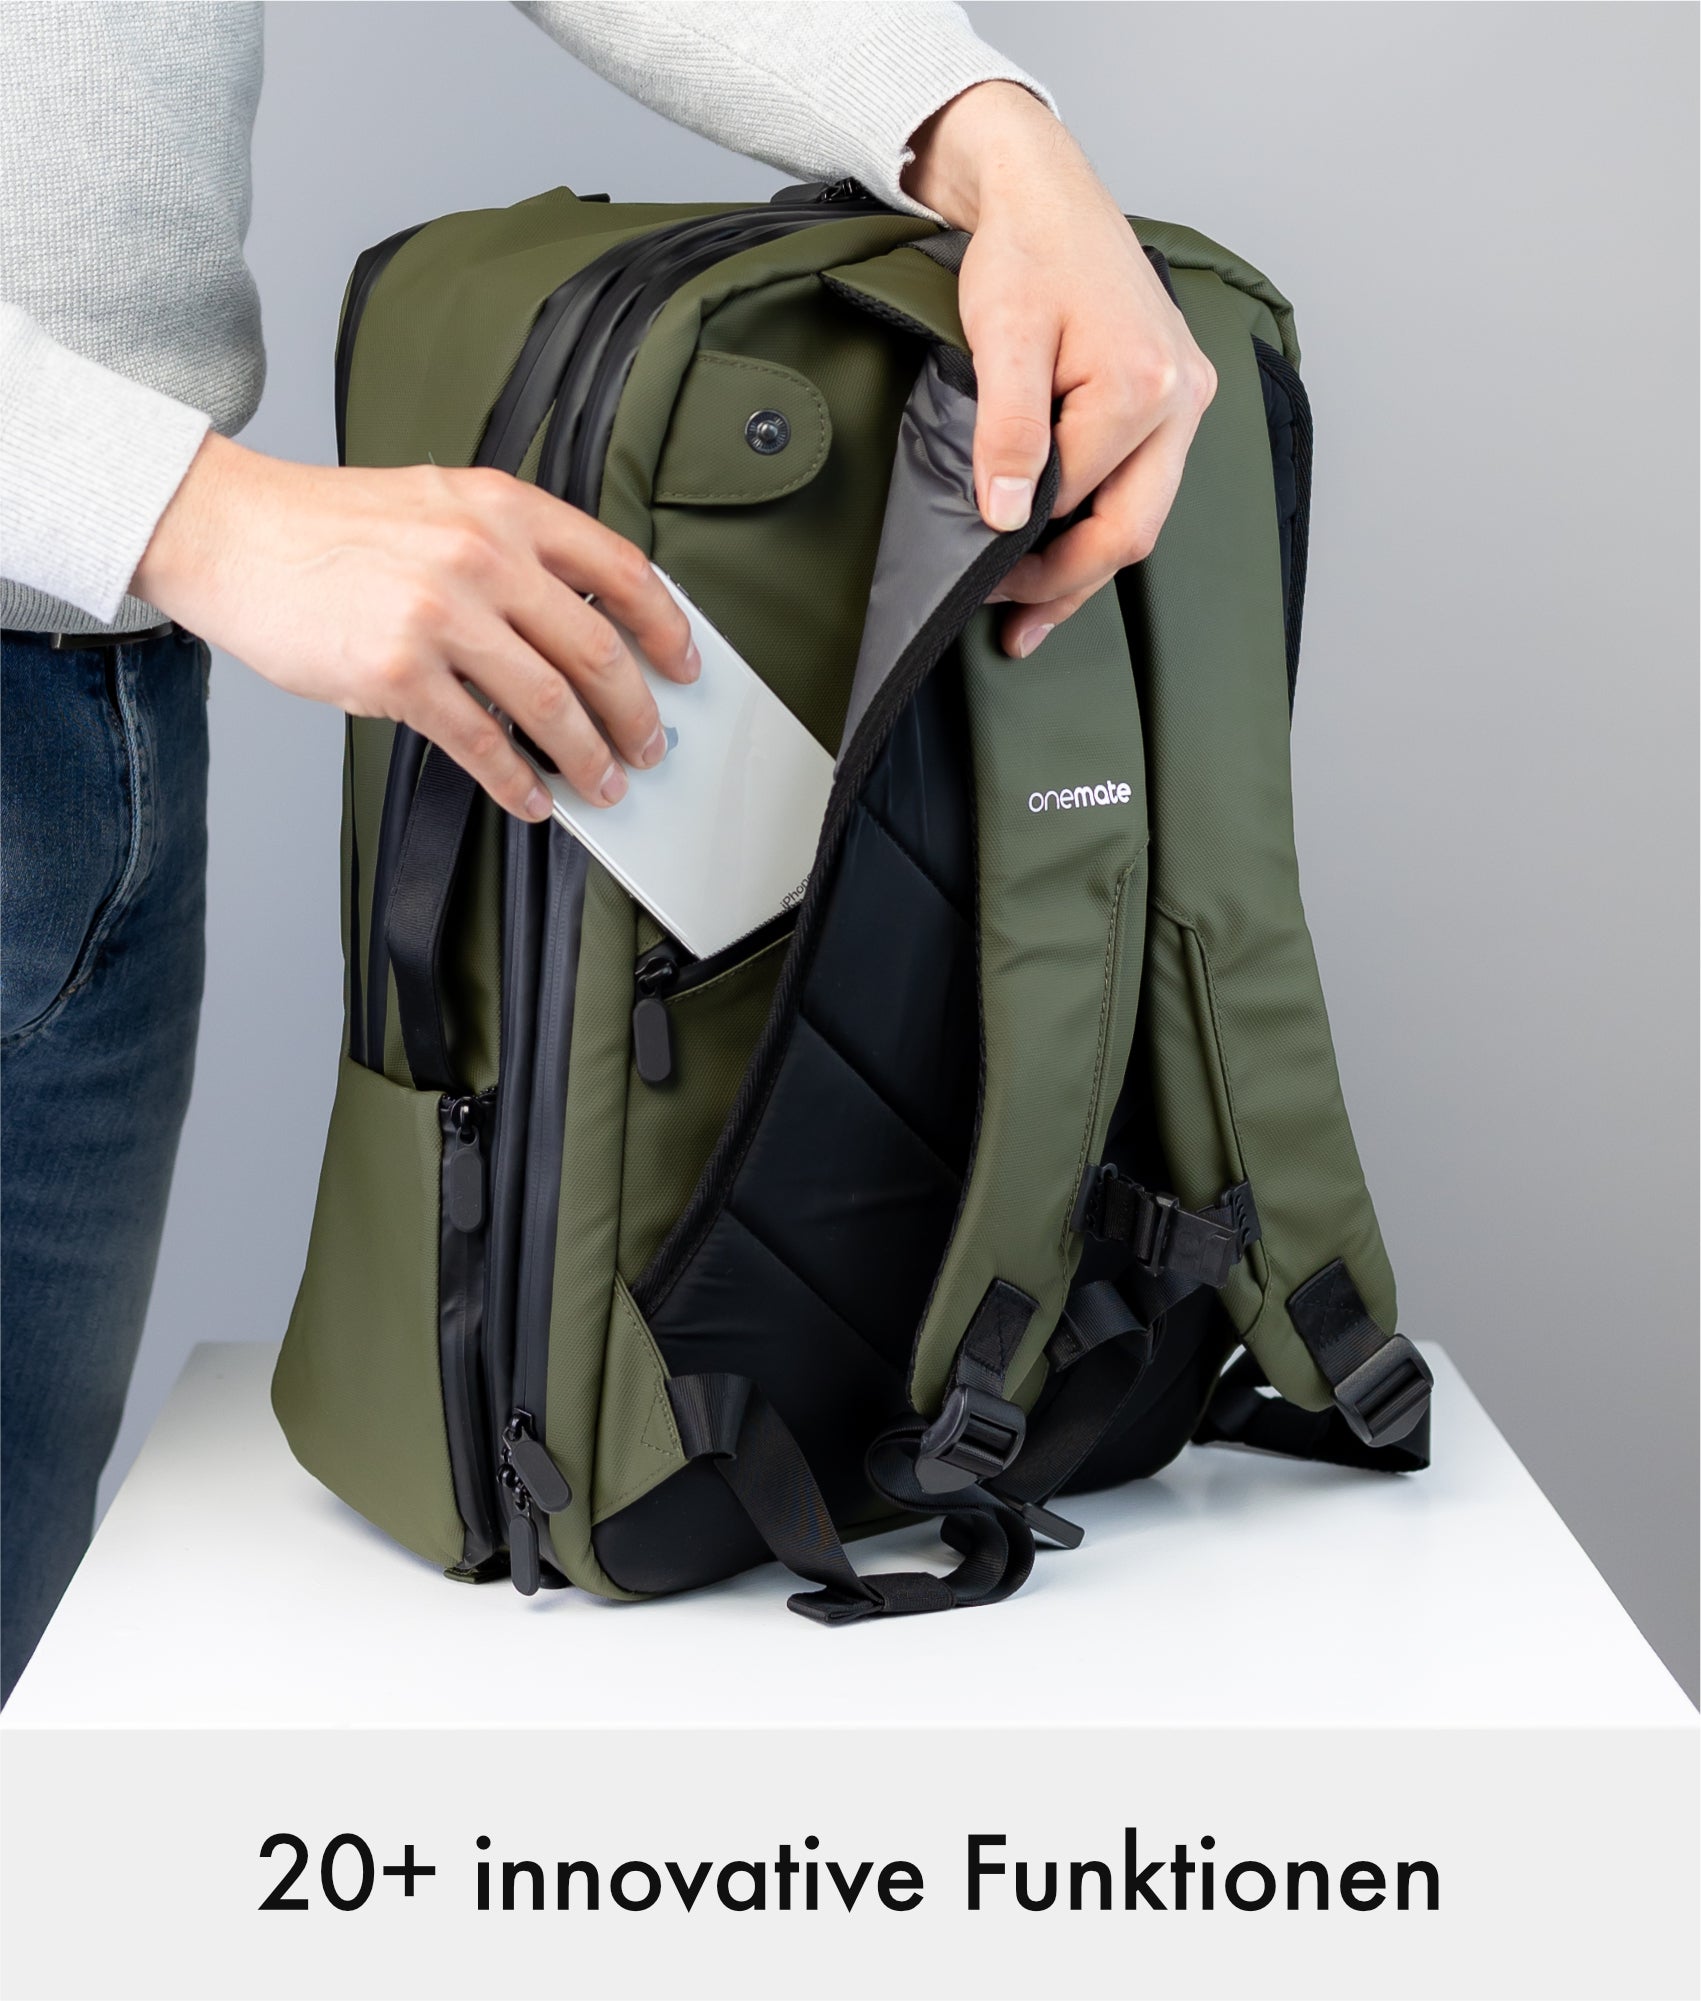 onemate Rucksack “Backpack pro” Herren Damen für 